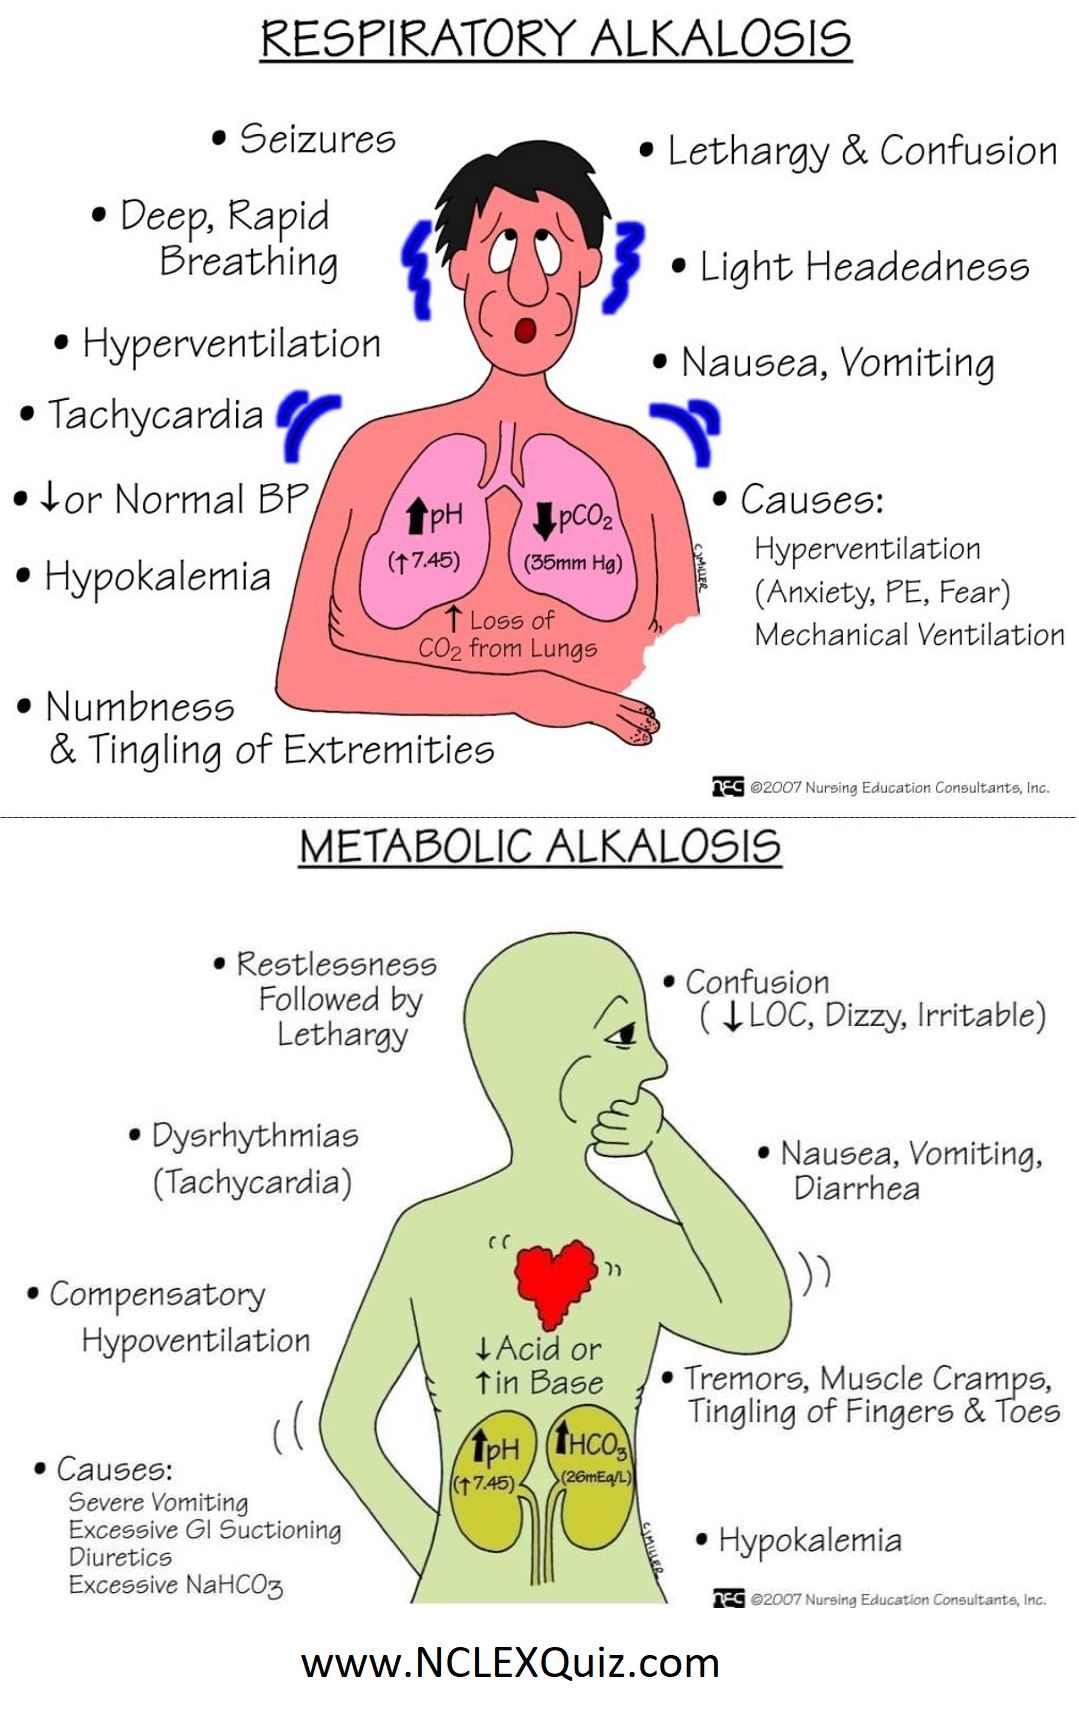 Asthma Attack Respiratory Alkalosis